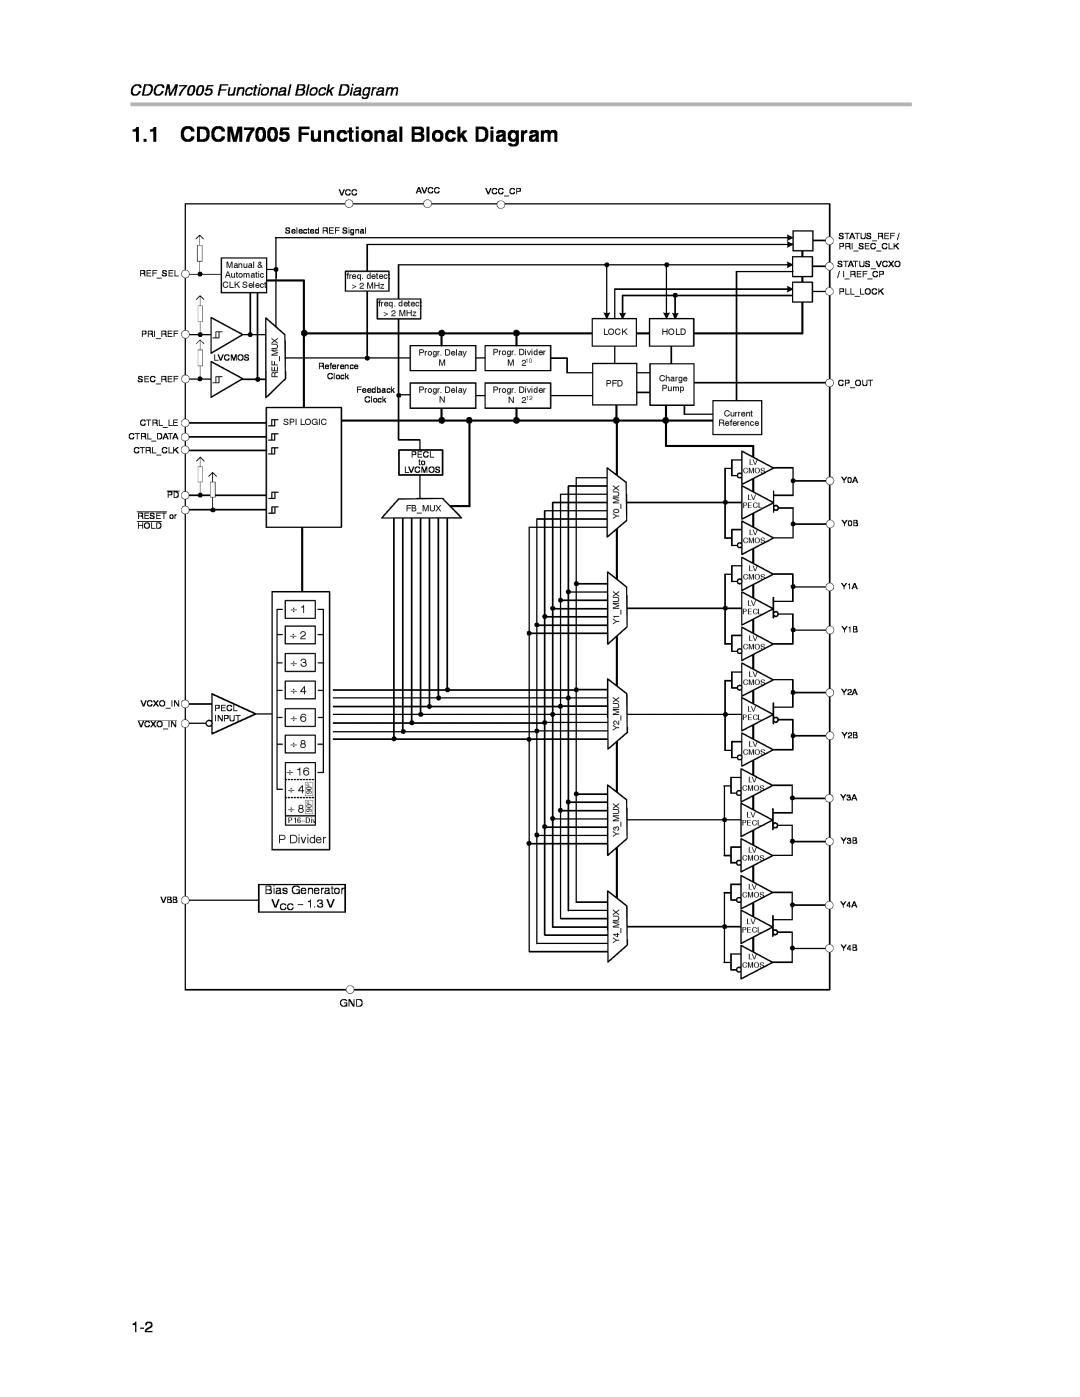 Texas Instruments manual CDCM7005 Functional Block Diagram, ⎟ ⎟ ⎟ ⎟ ⎟ 6 ⎟, ⎟ 4 o, P Divider, VCC − 1.3 